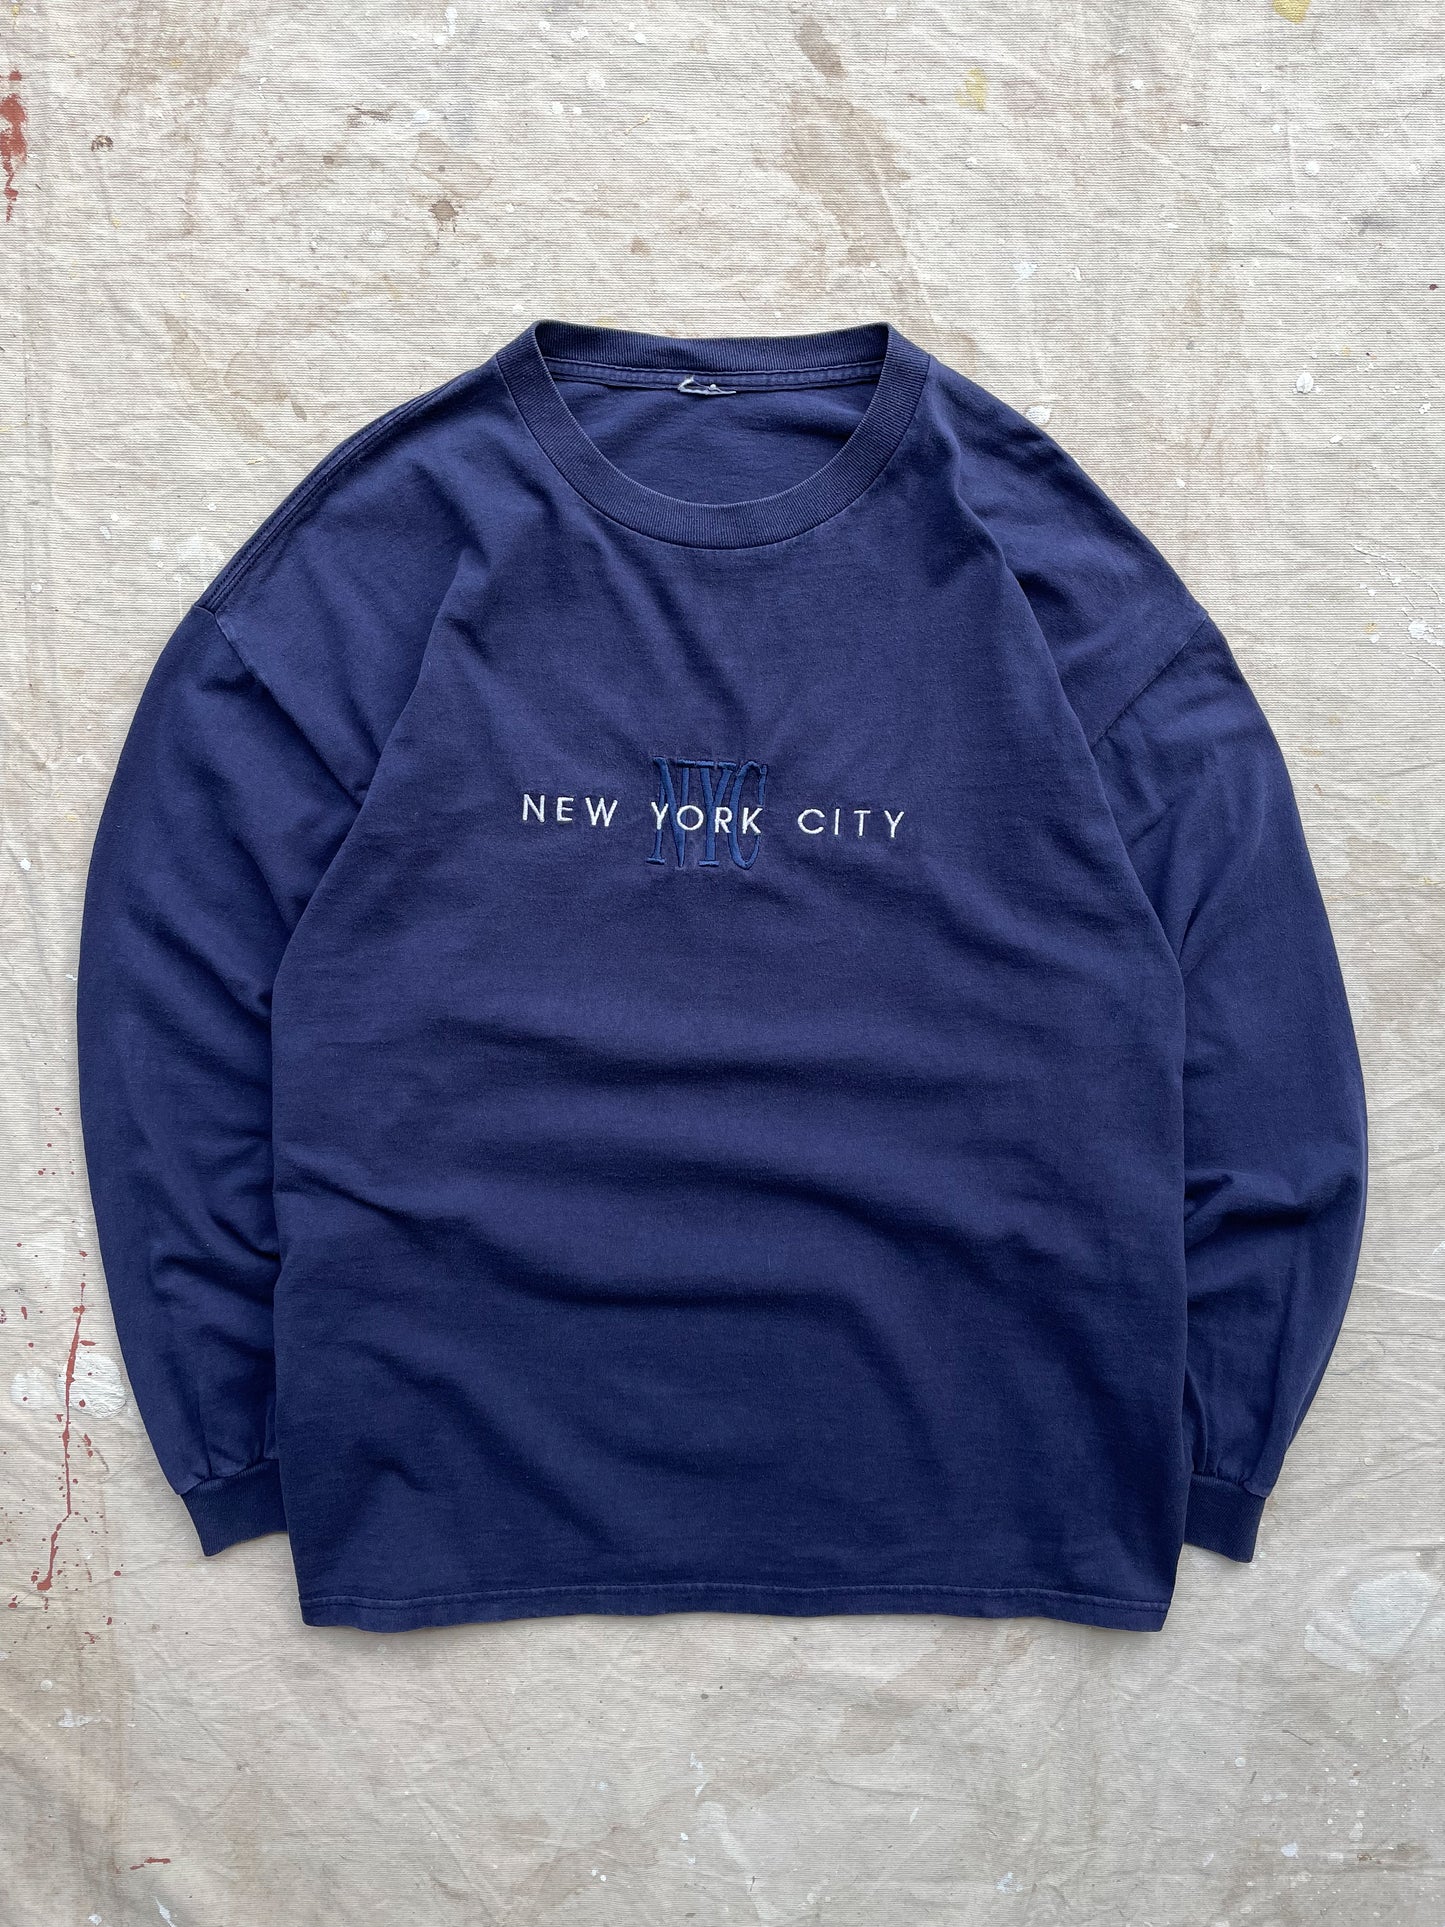 NYC LONG SLEEVE—NAVY [XL]